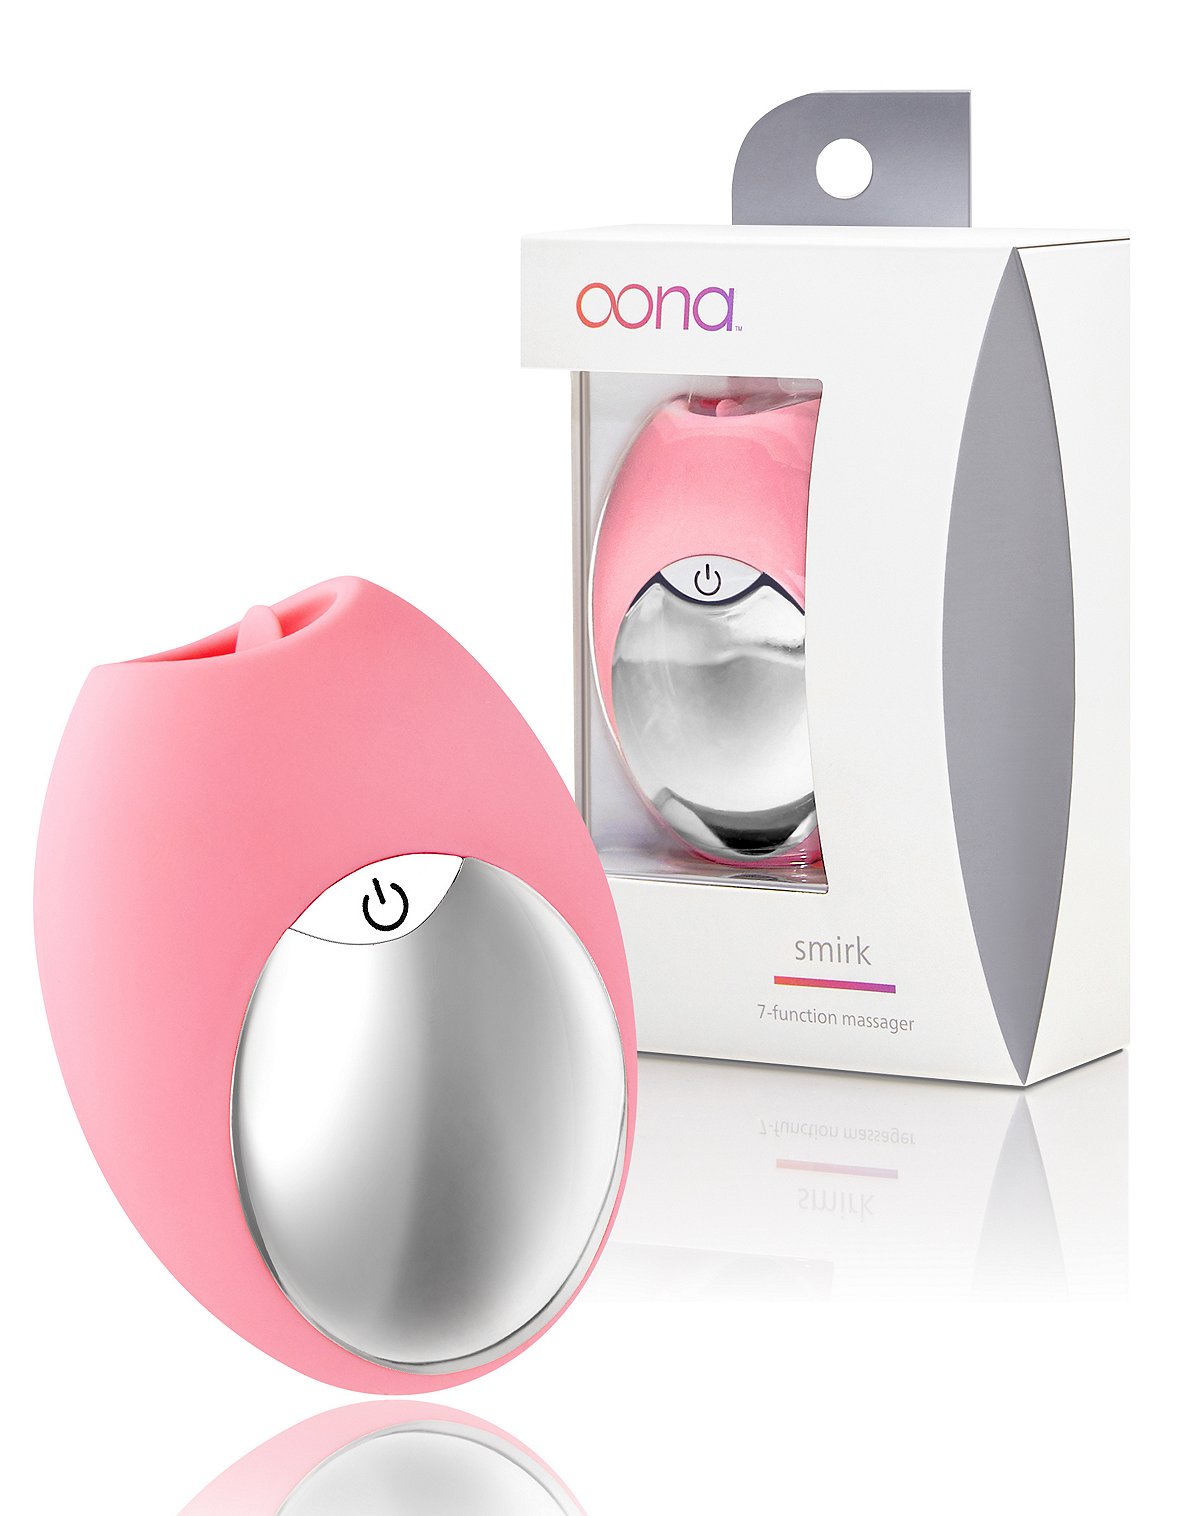 Oona Smirk rechargeable waterproof tongue vibrator